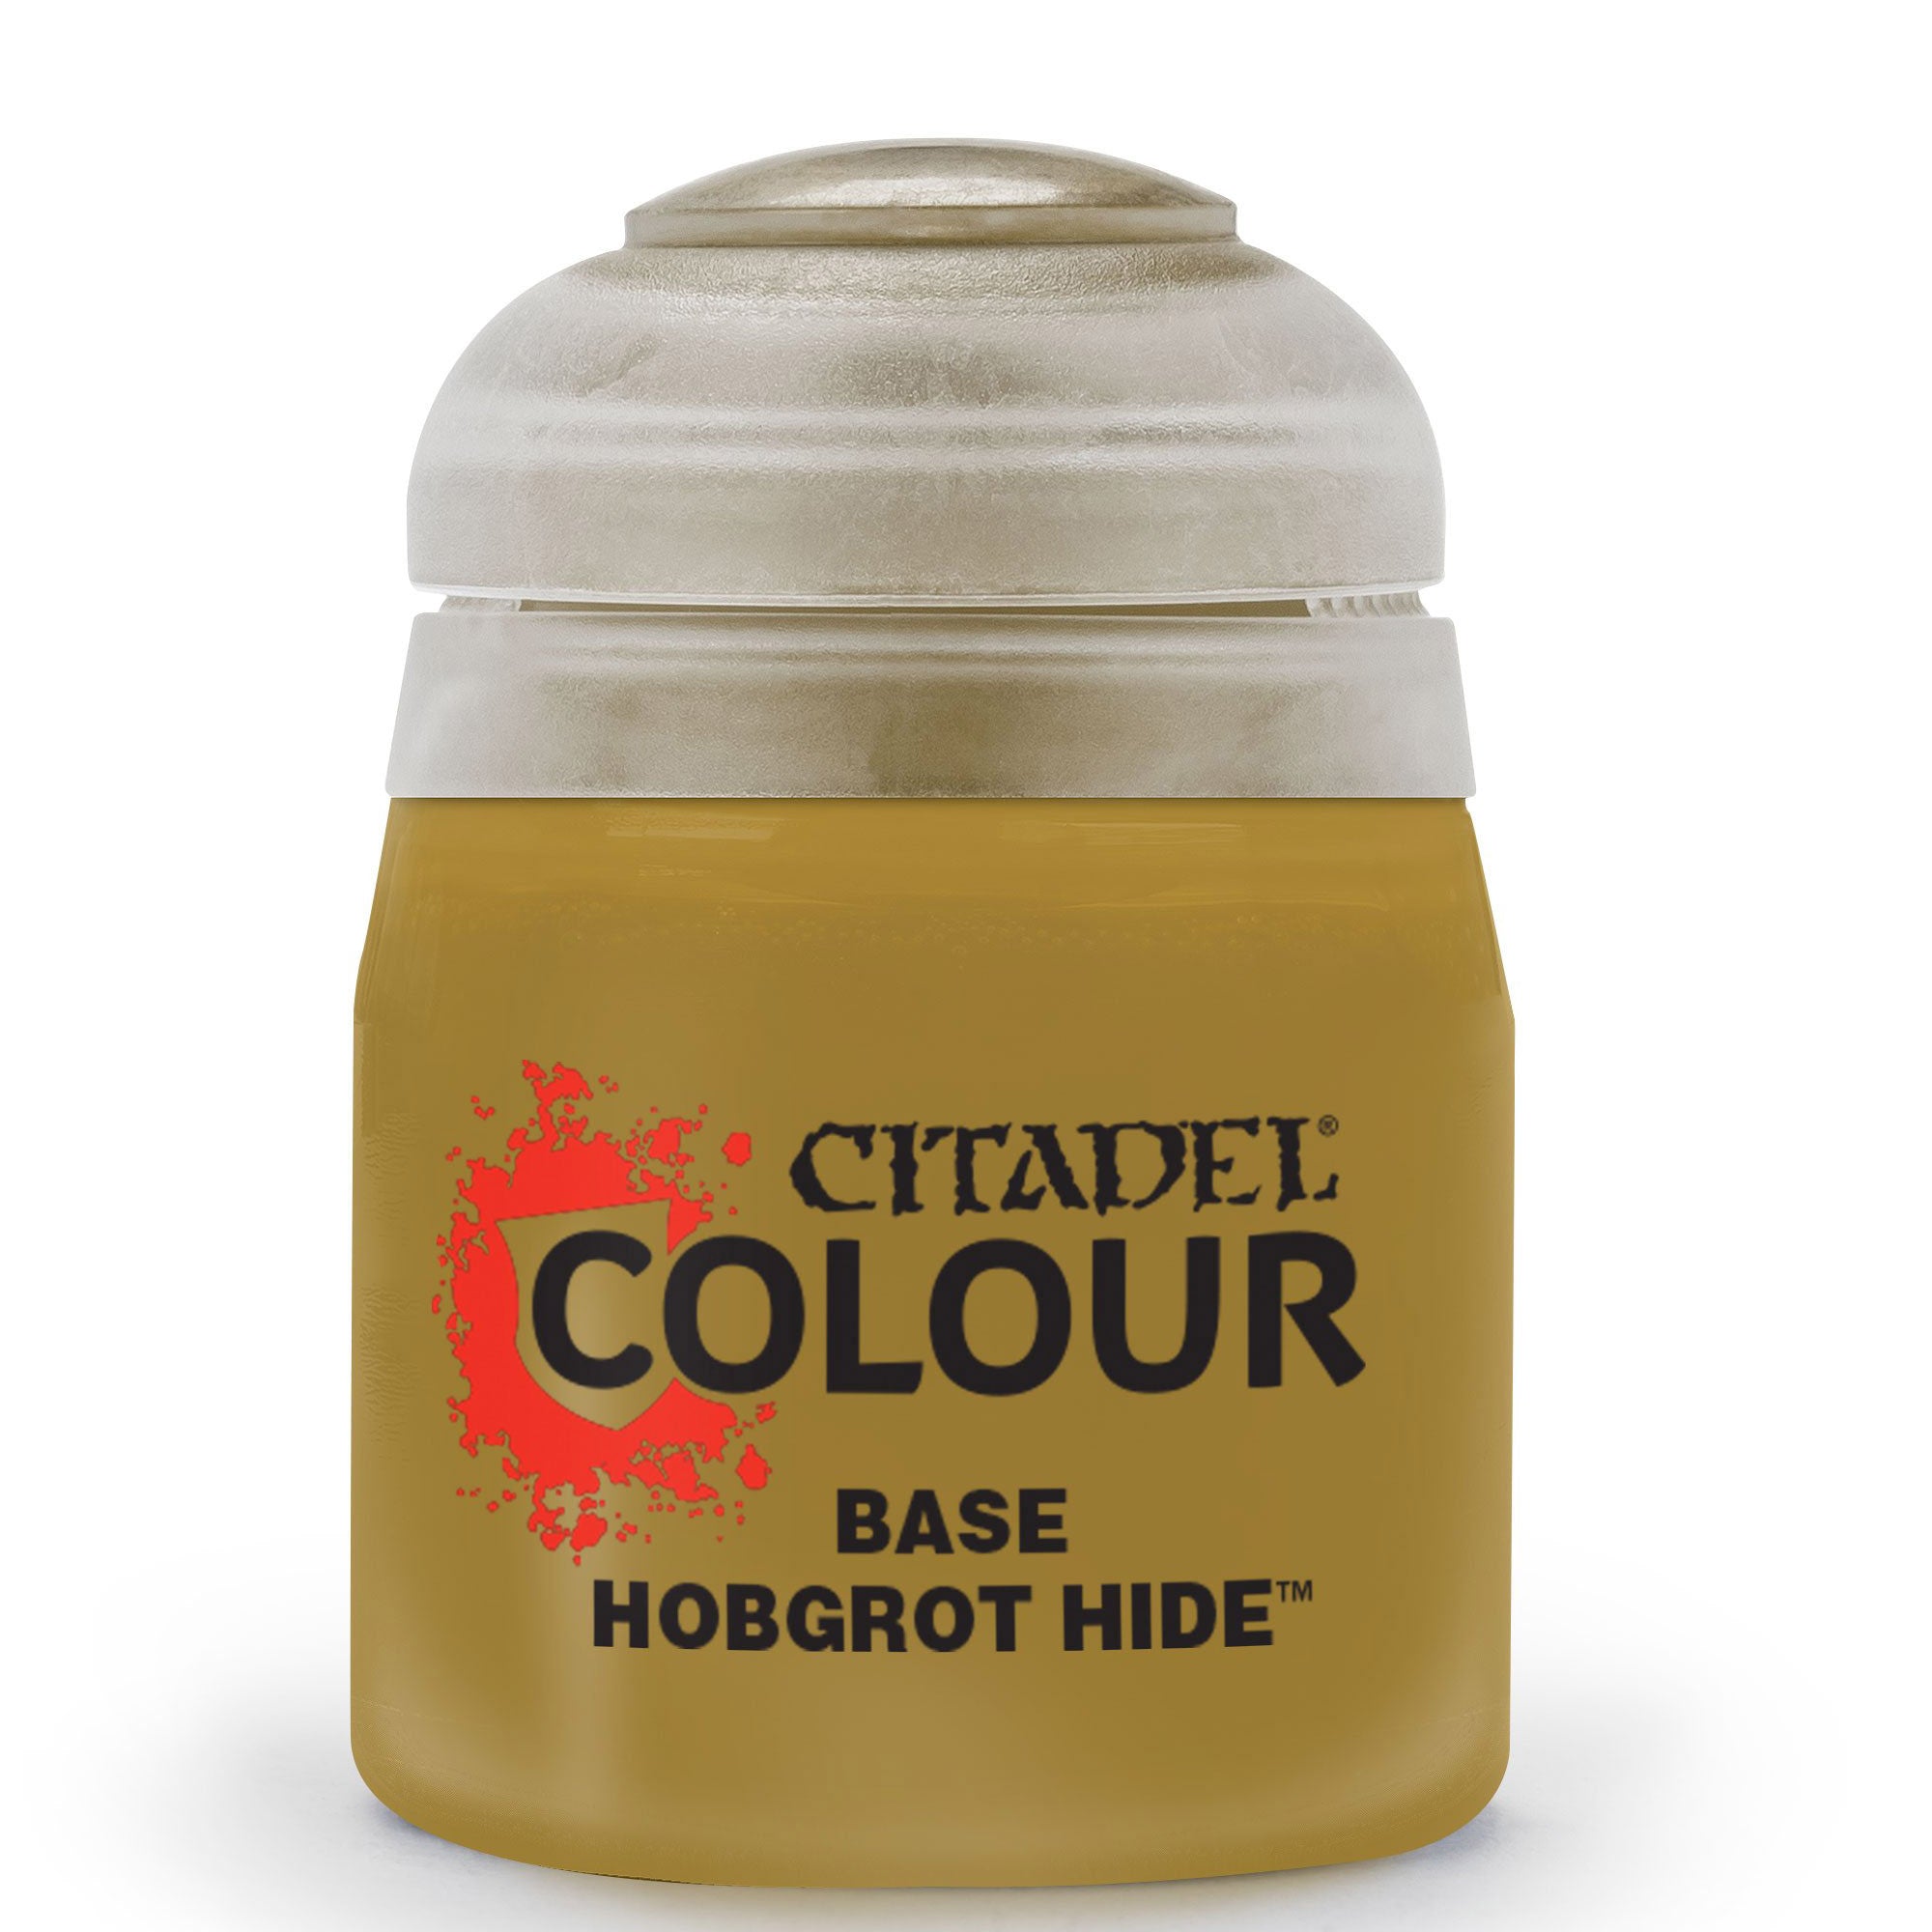 Citadel Colour Base Paint Hobgrot Hide (12ml)